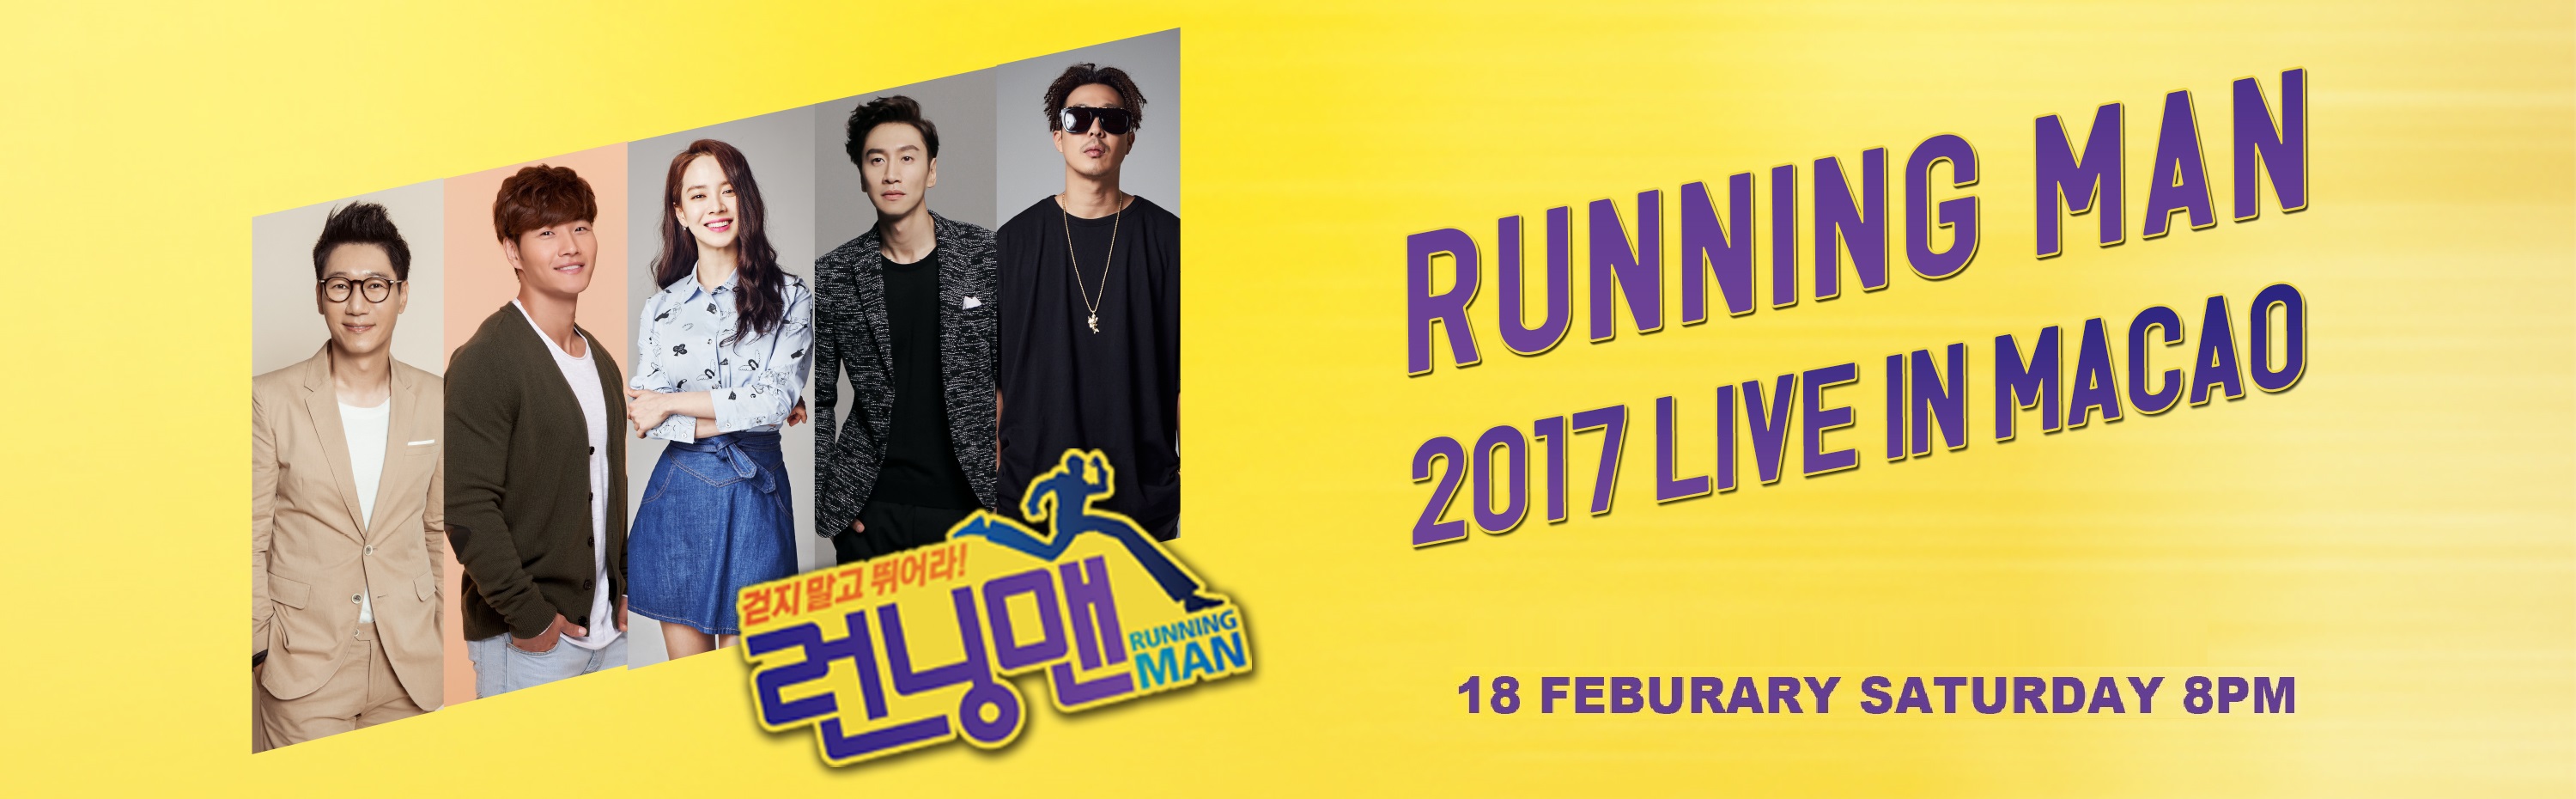 Running Man 2017 Macao Live Show